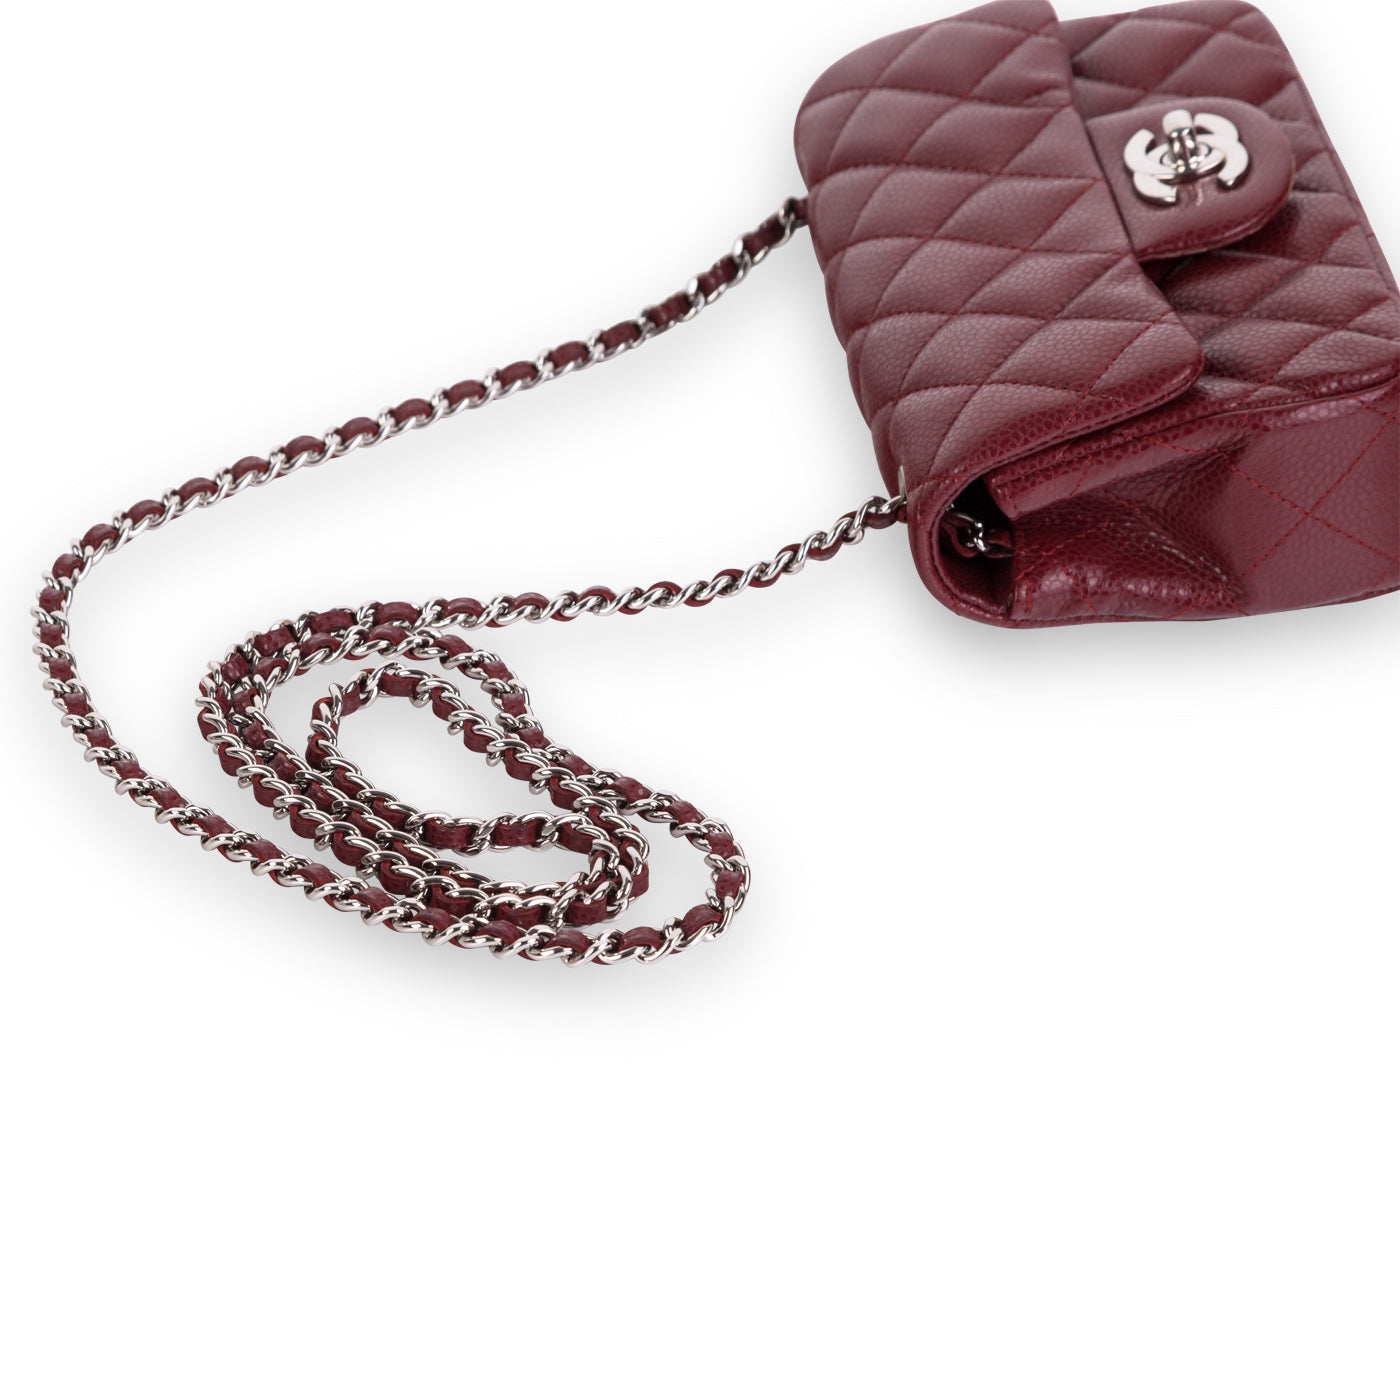 Chanel - Classic Flap Bag - Extra Mini - Burgundy - SHW